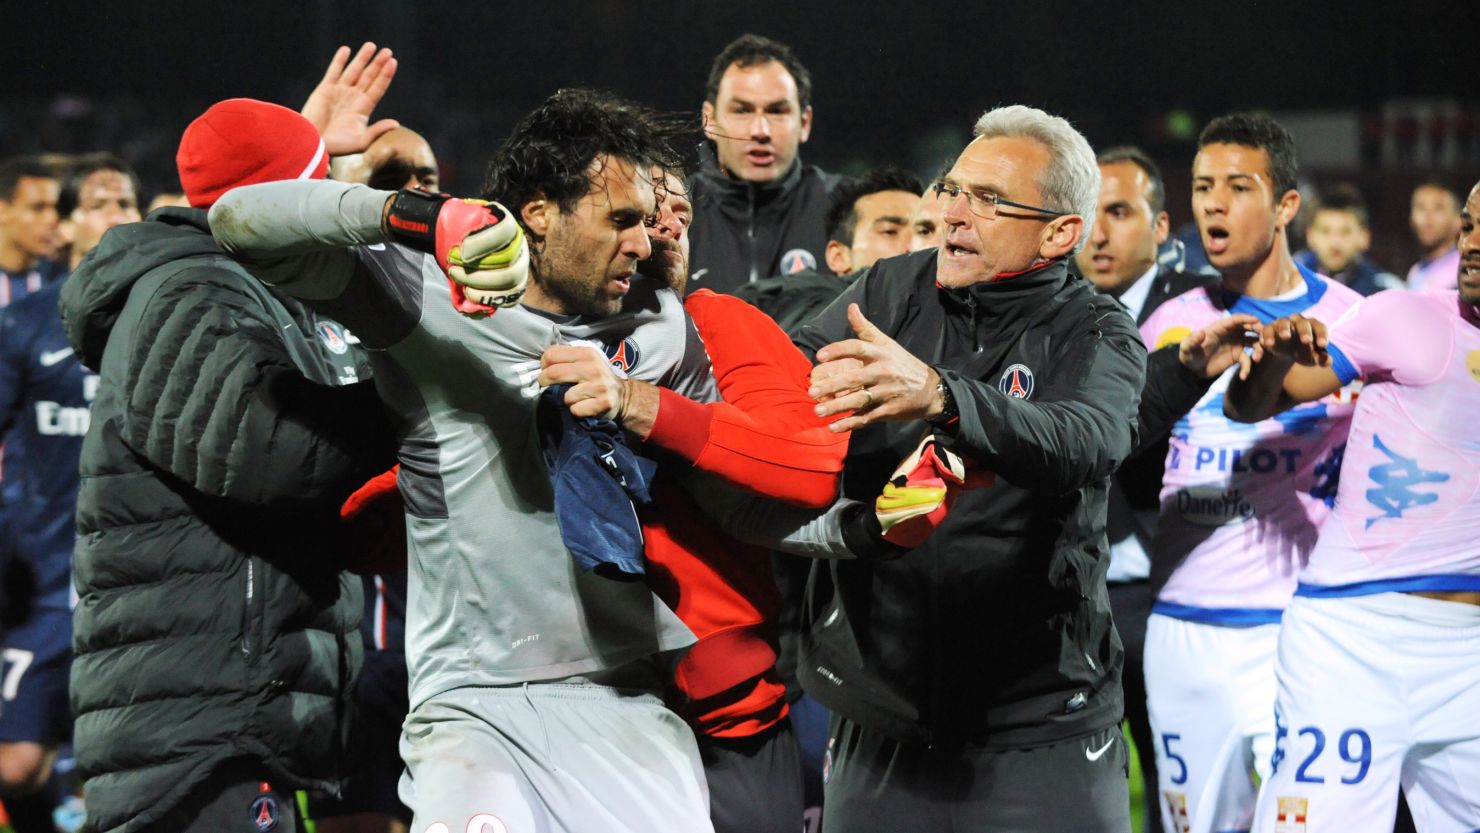 Paris Saint-Germain goalkeeper Salvatore Sirigu was sent off after the final whistle.